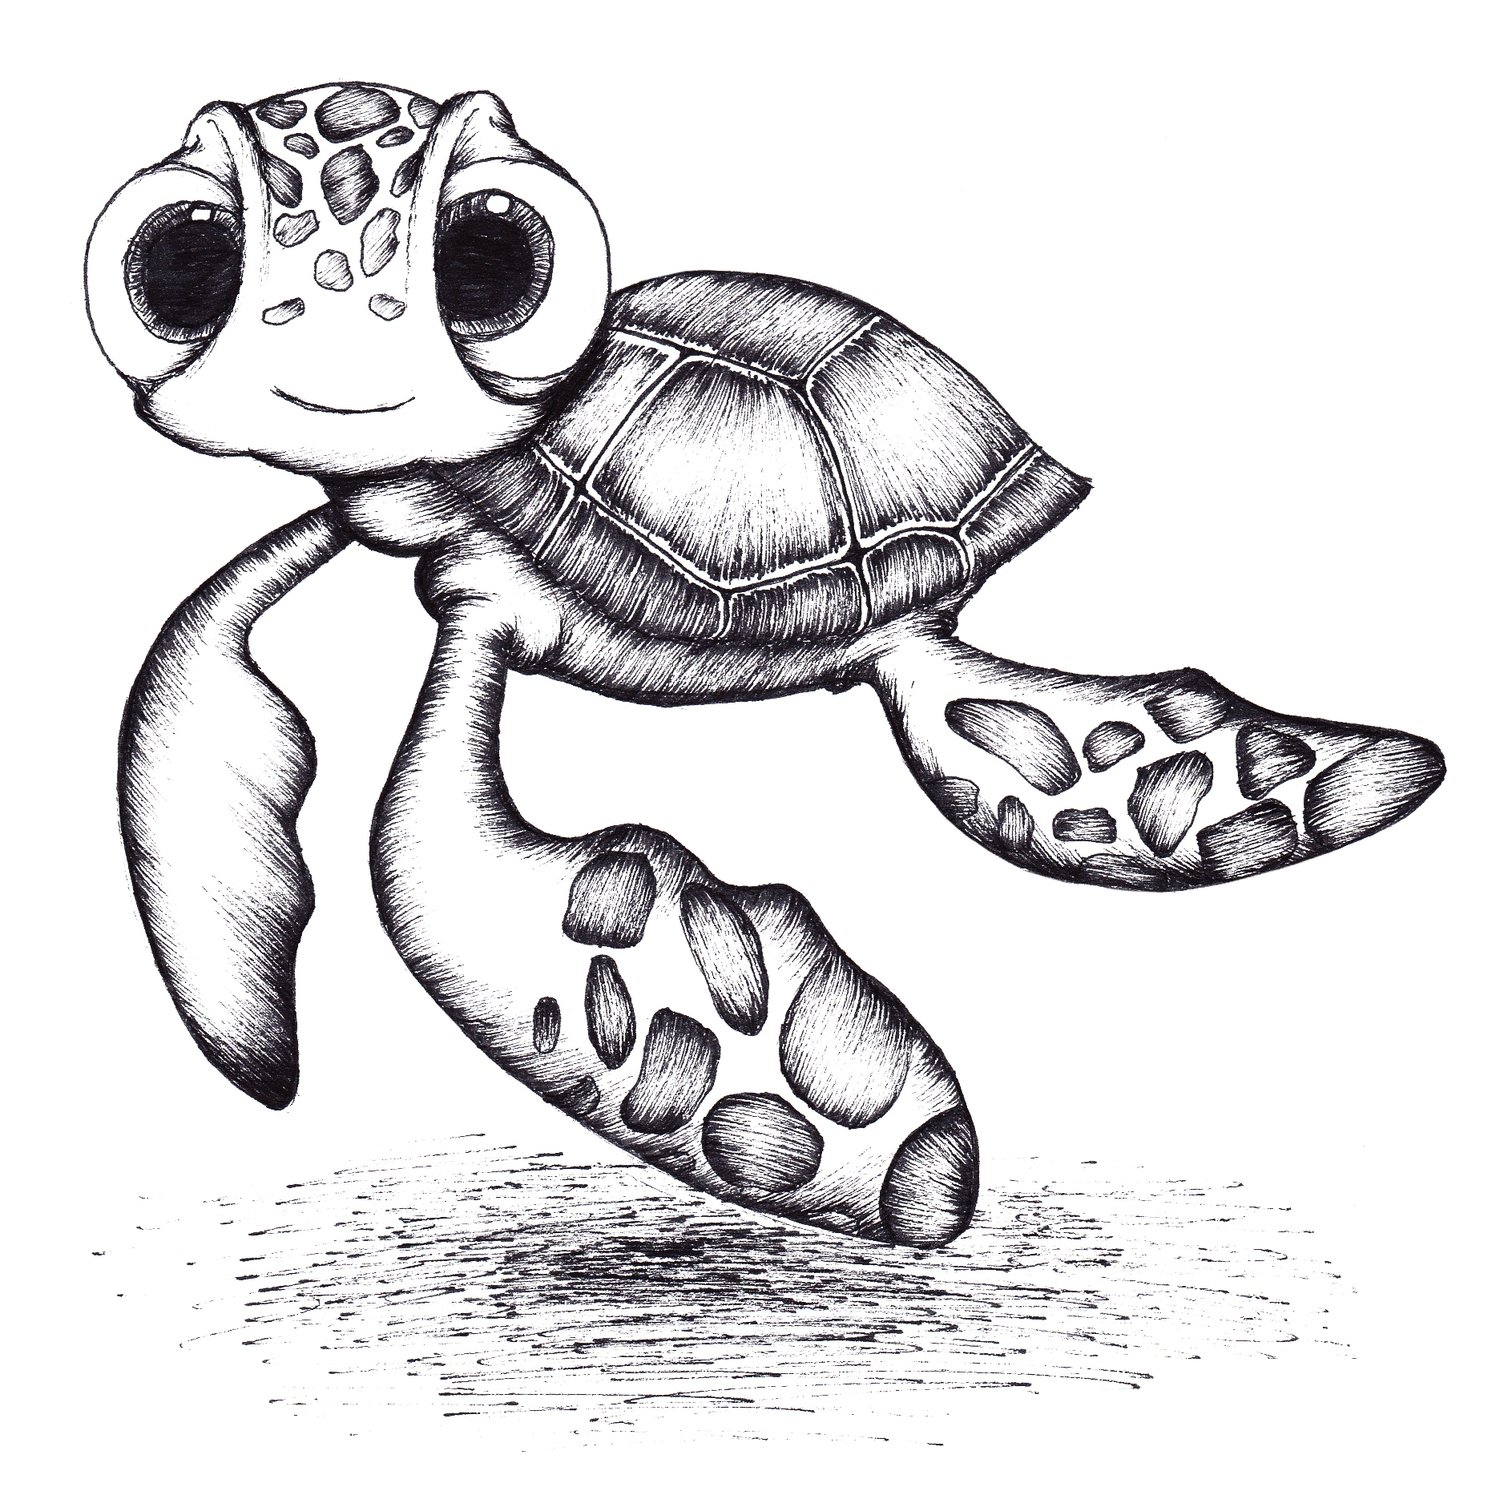 Turtle drawing